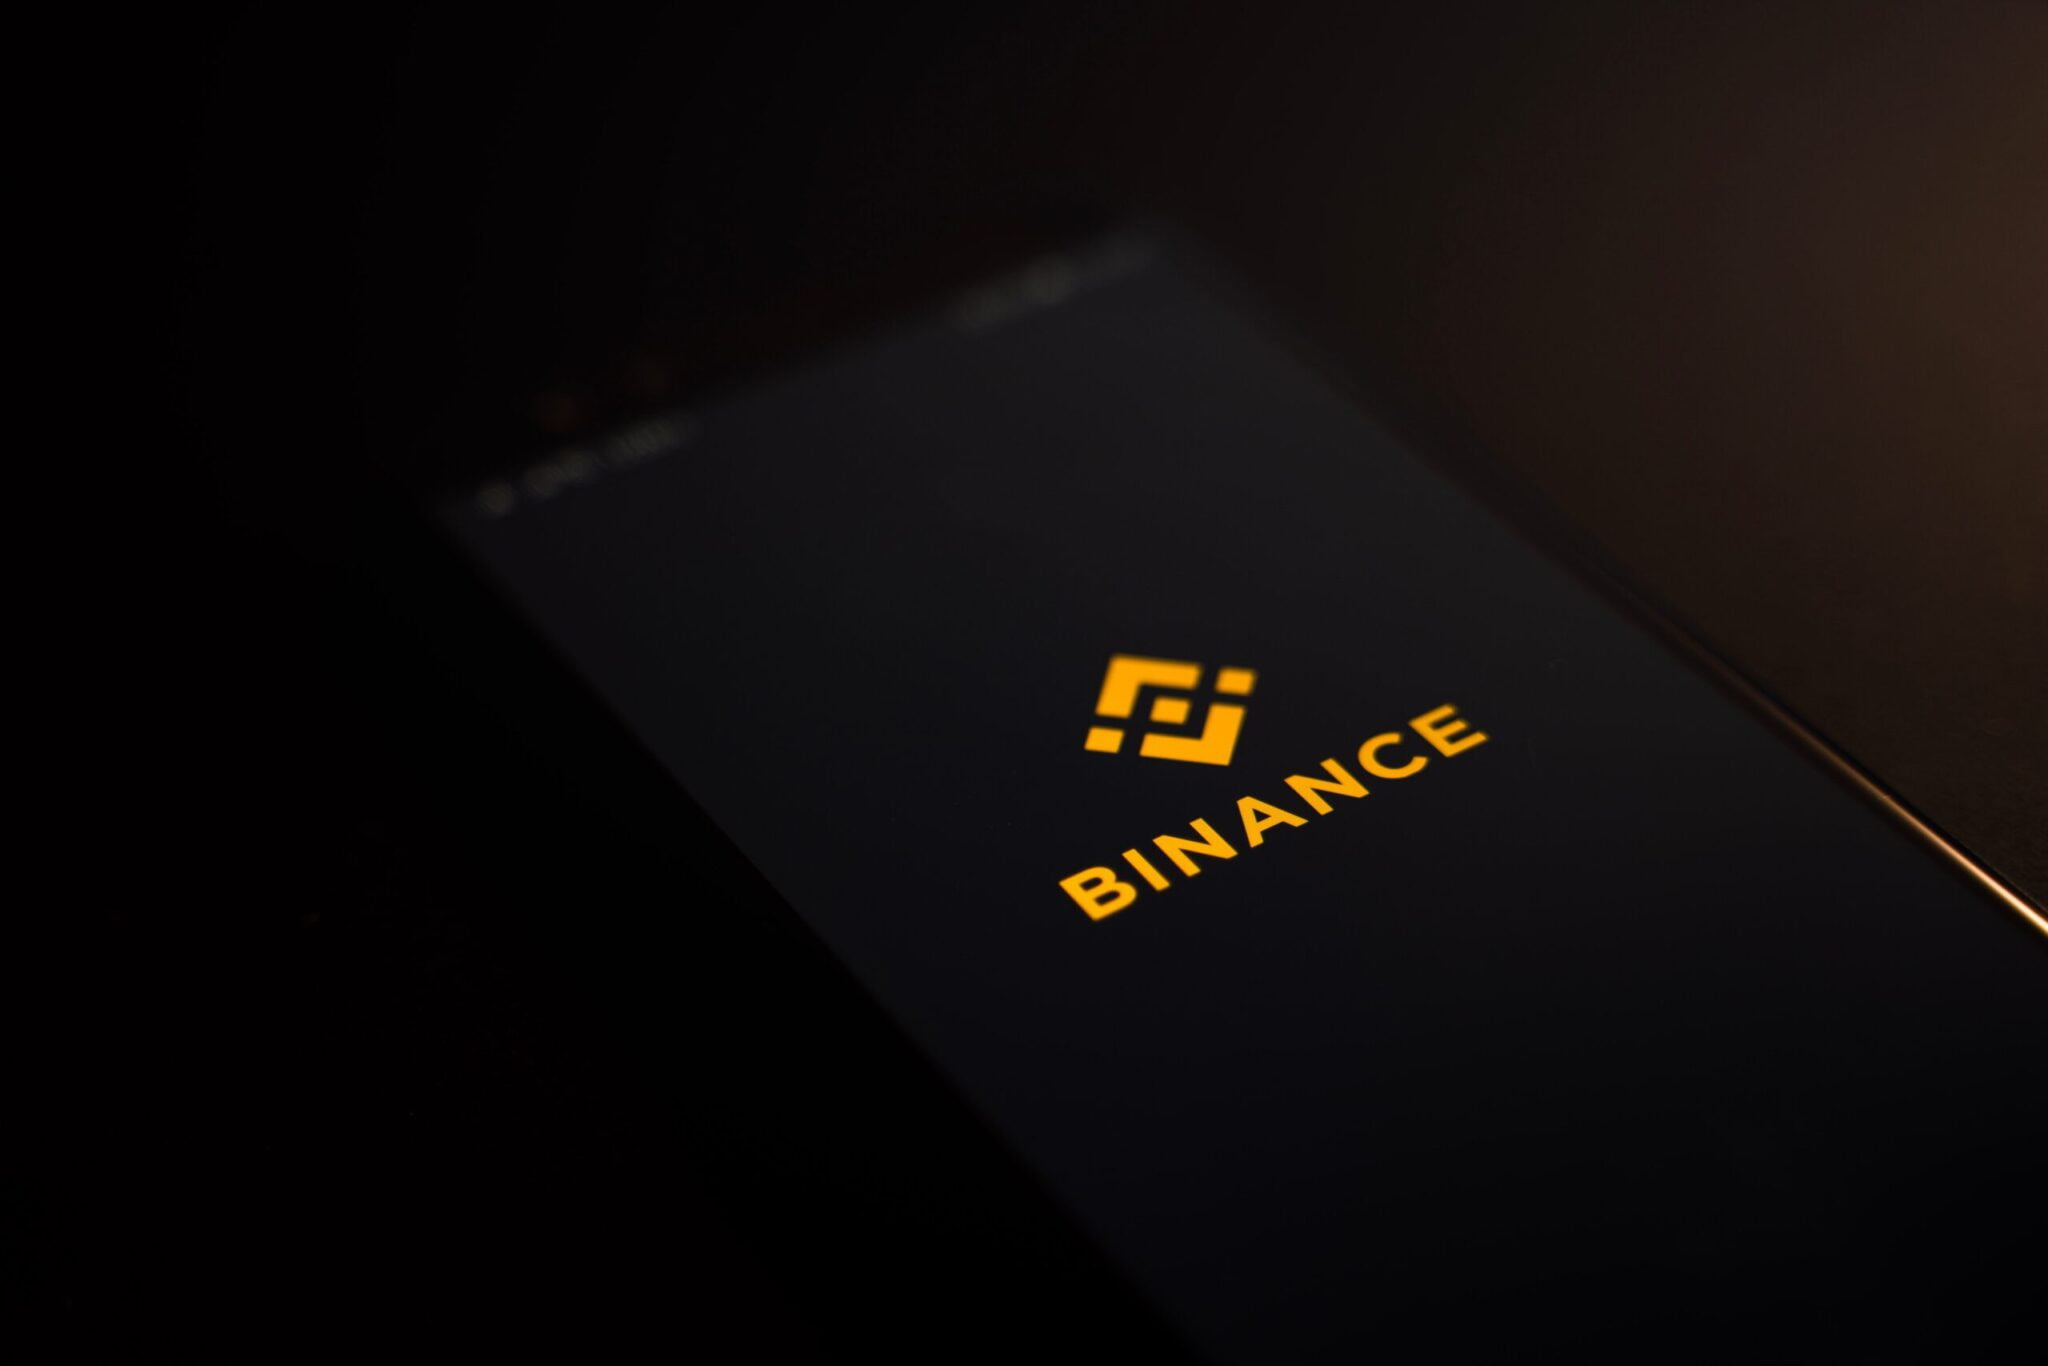 Binance logo to represent Binance and Polkadot's collaboration